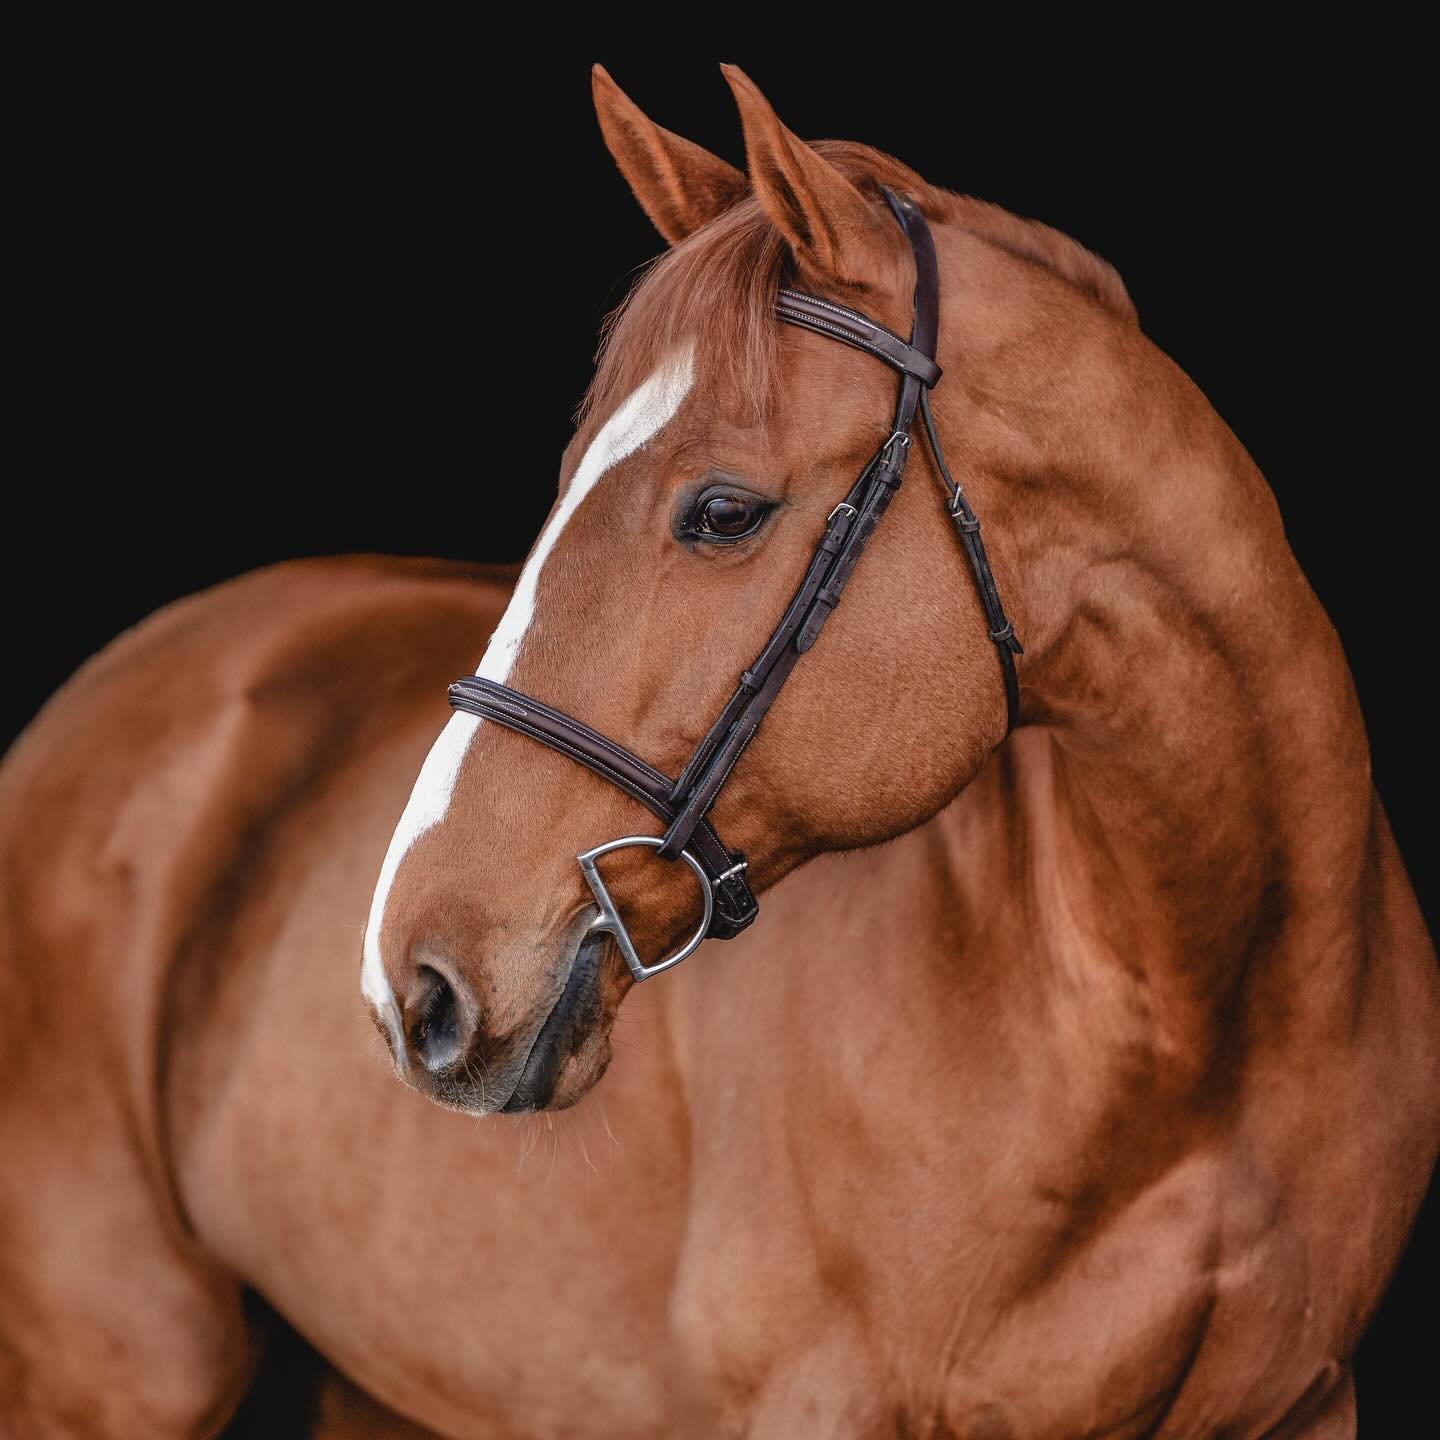 🐴
.
.
.
#equestrainphotographer #equineportrait #horsephotographer #equinephotography #equestrianlife